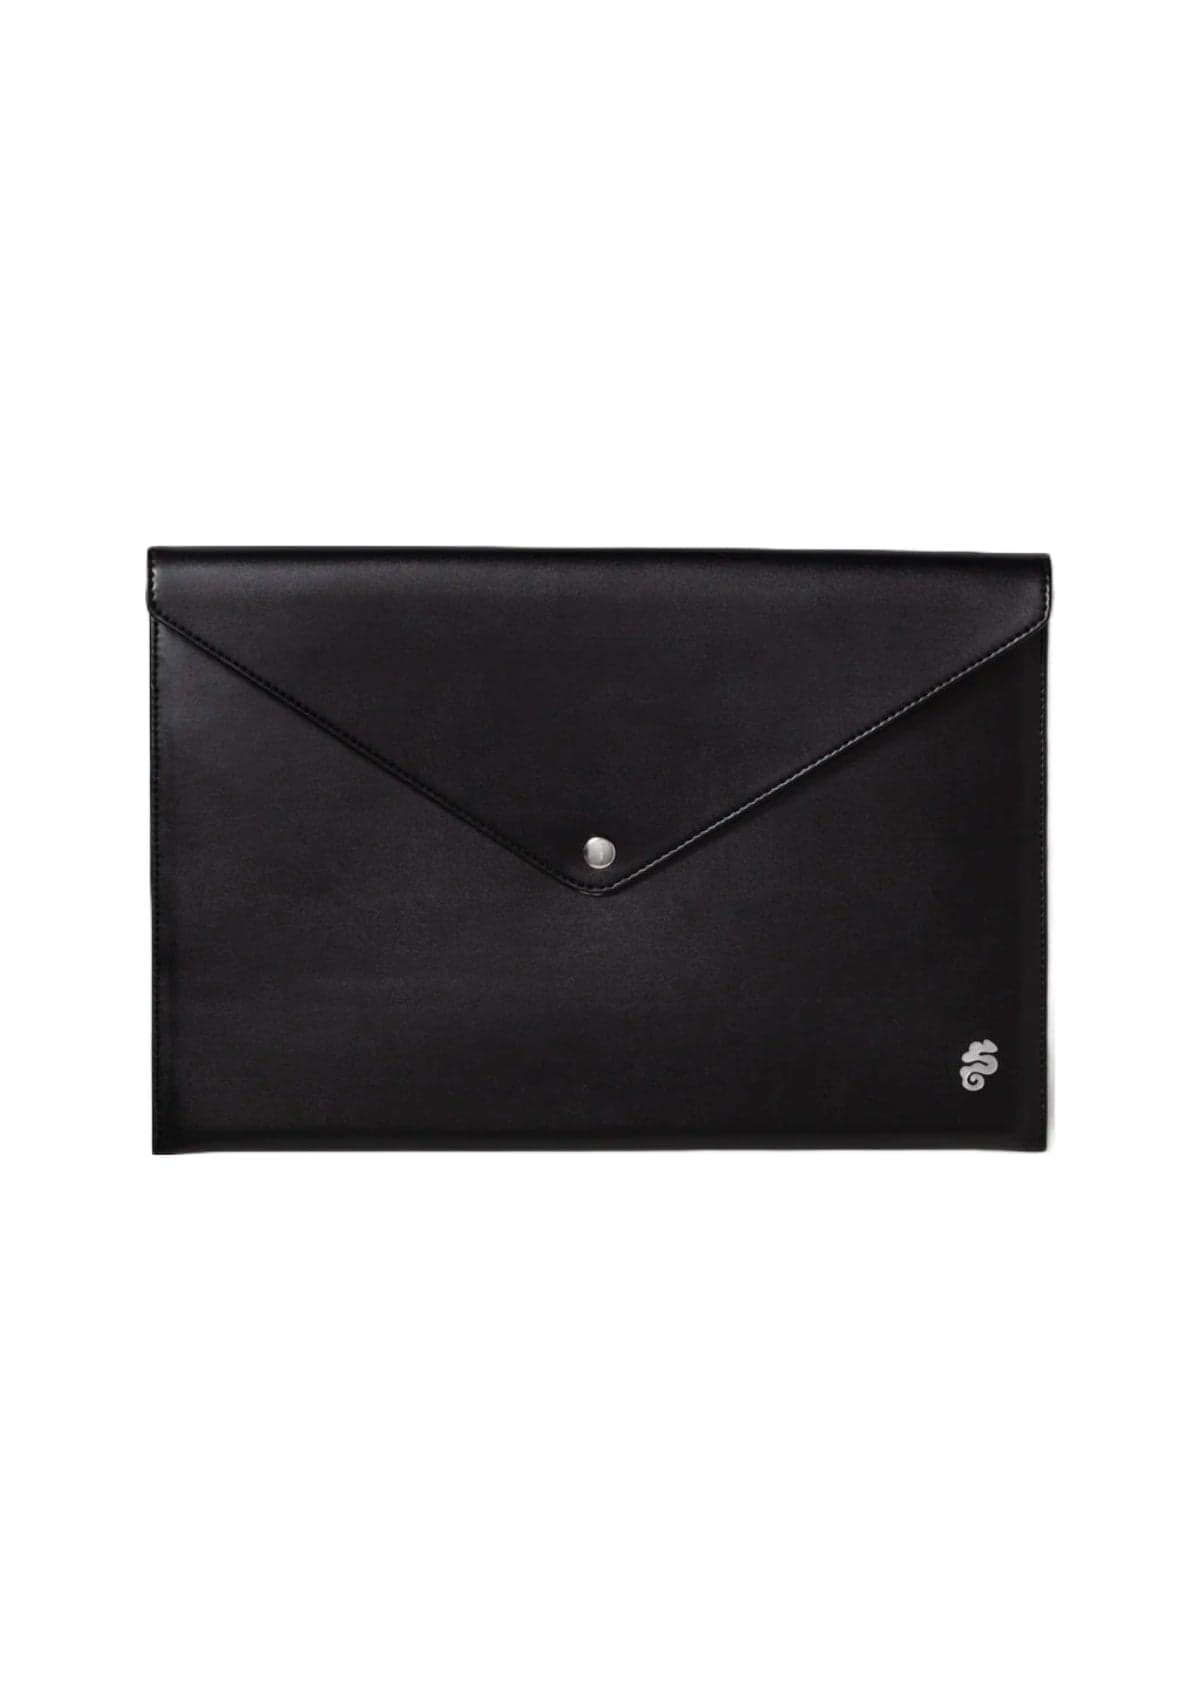 Sarelly Envelope Portalaptop - Black